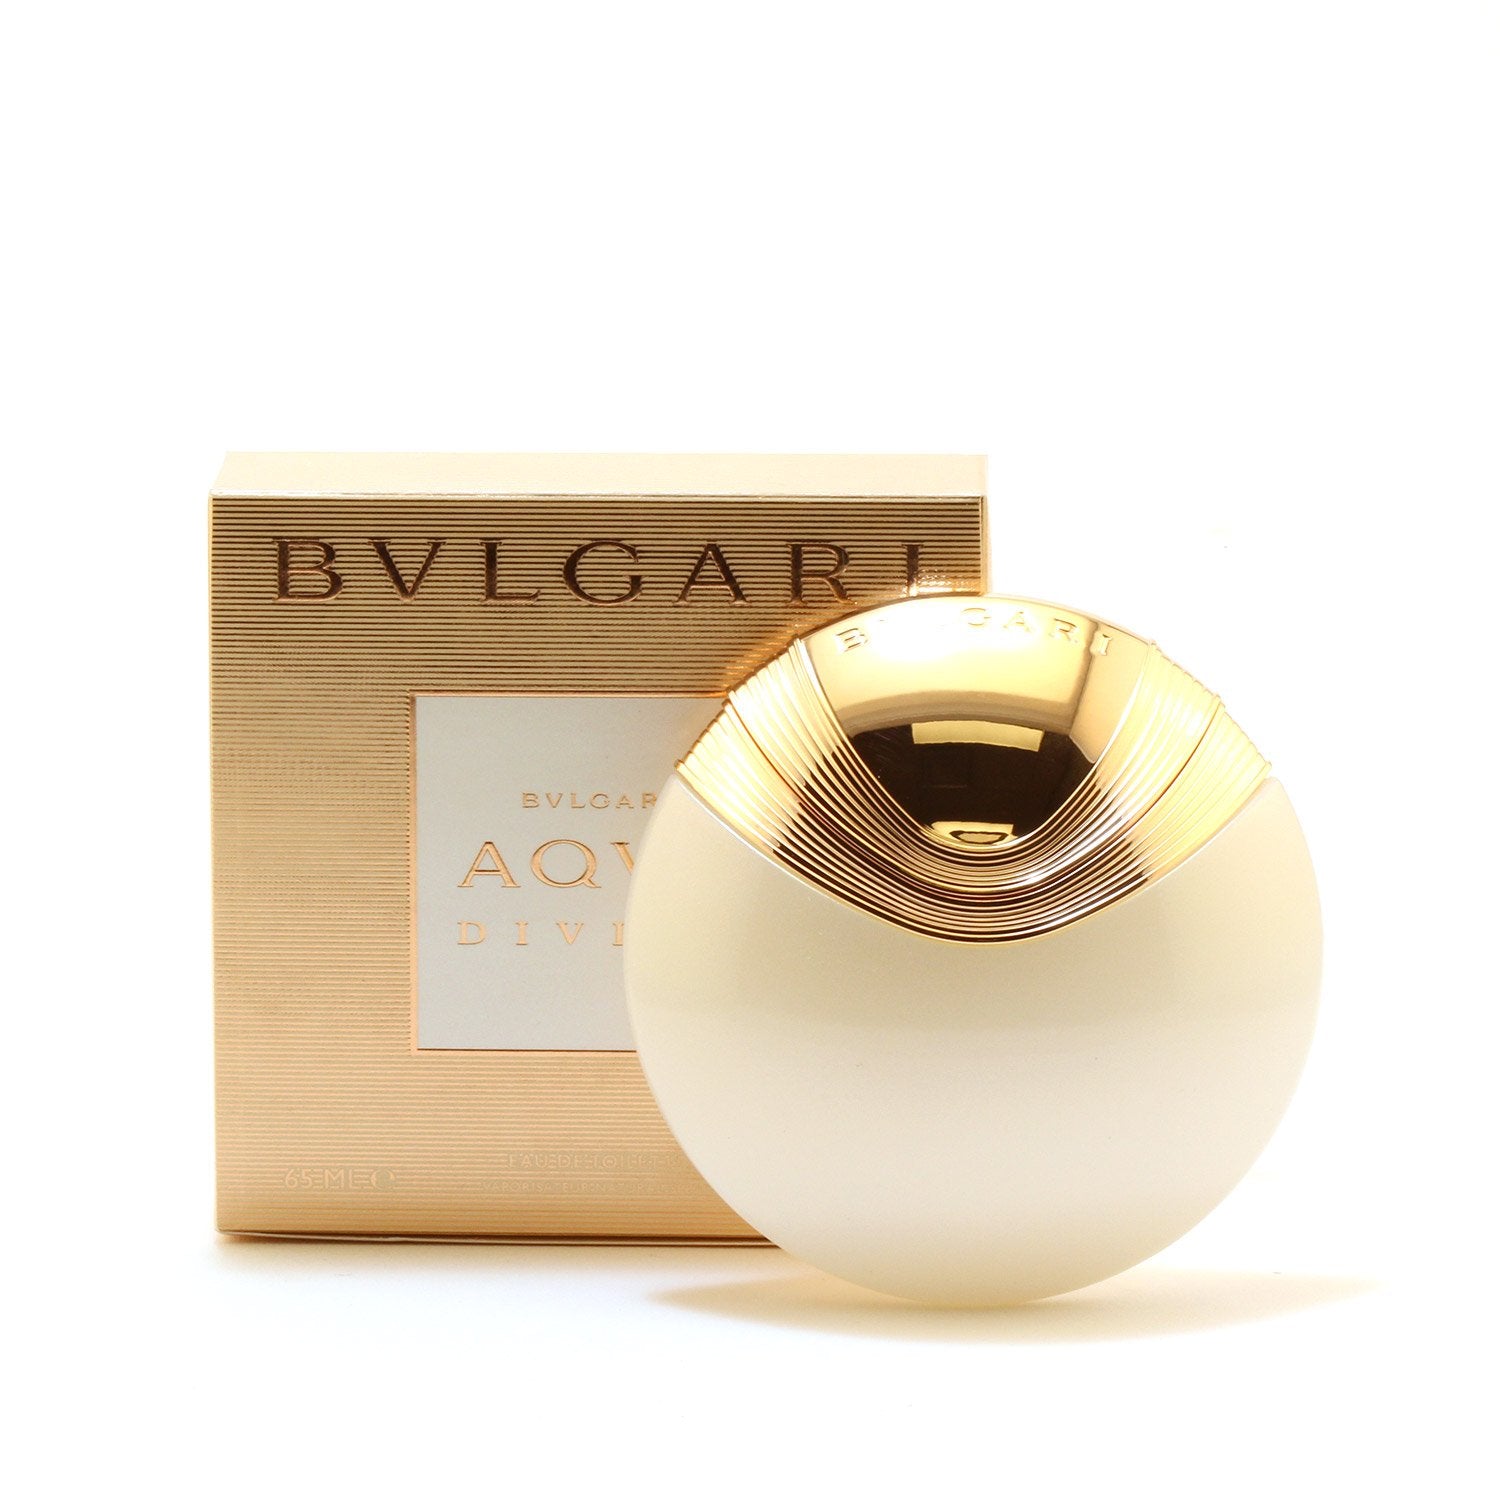 Perfume - BVLGARI AQUA DIVINA FOR WOMEN - EAU DE TOILETTE SPRAY, 2.2 OZ